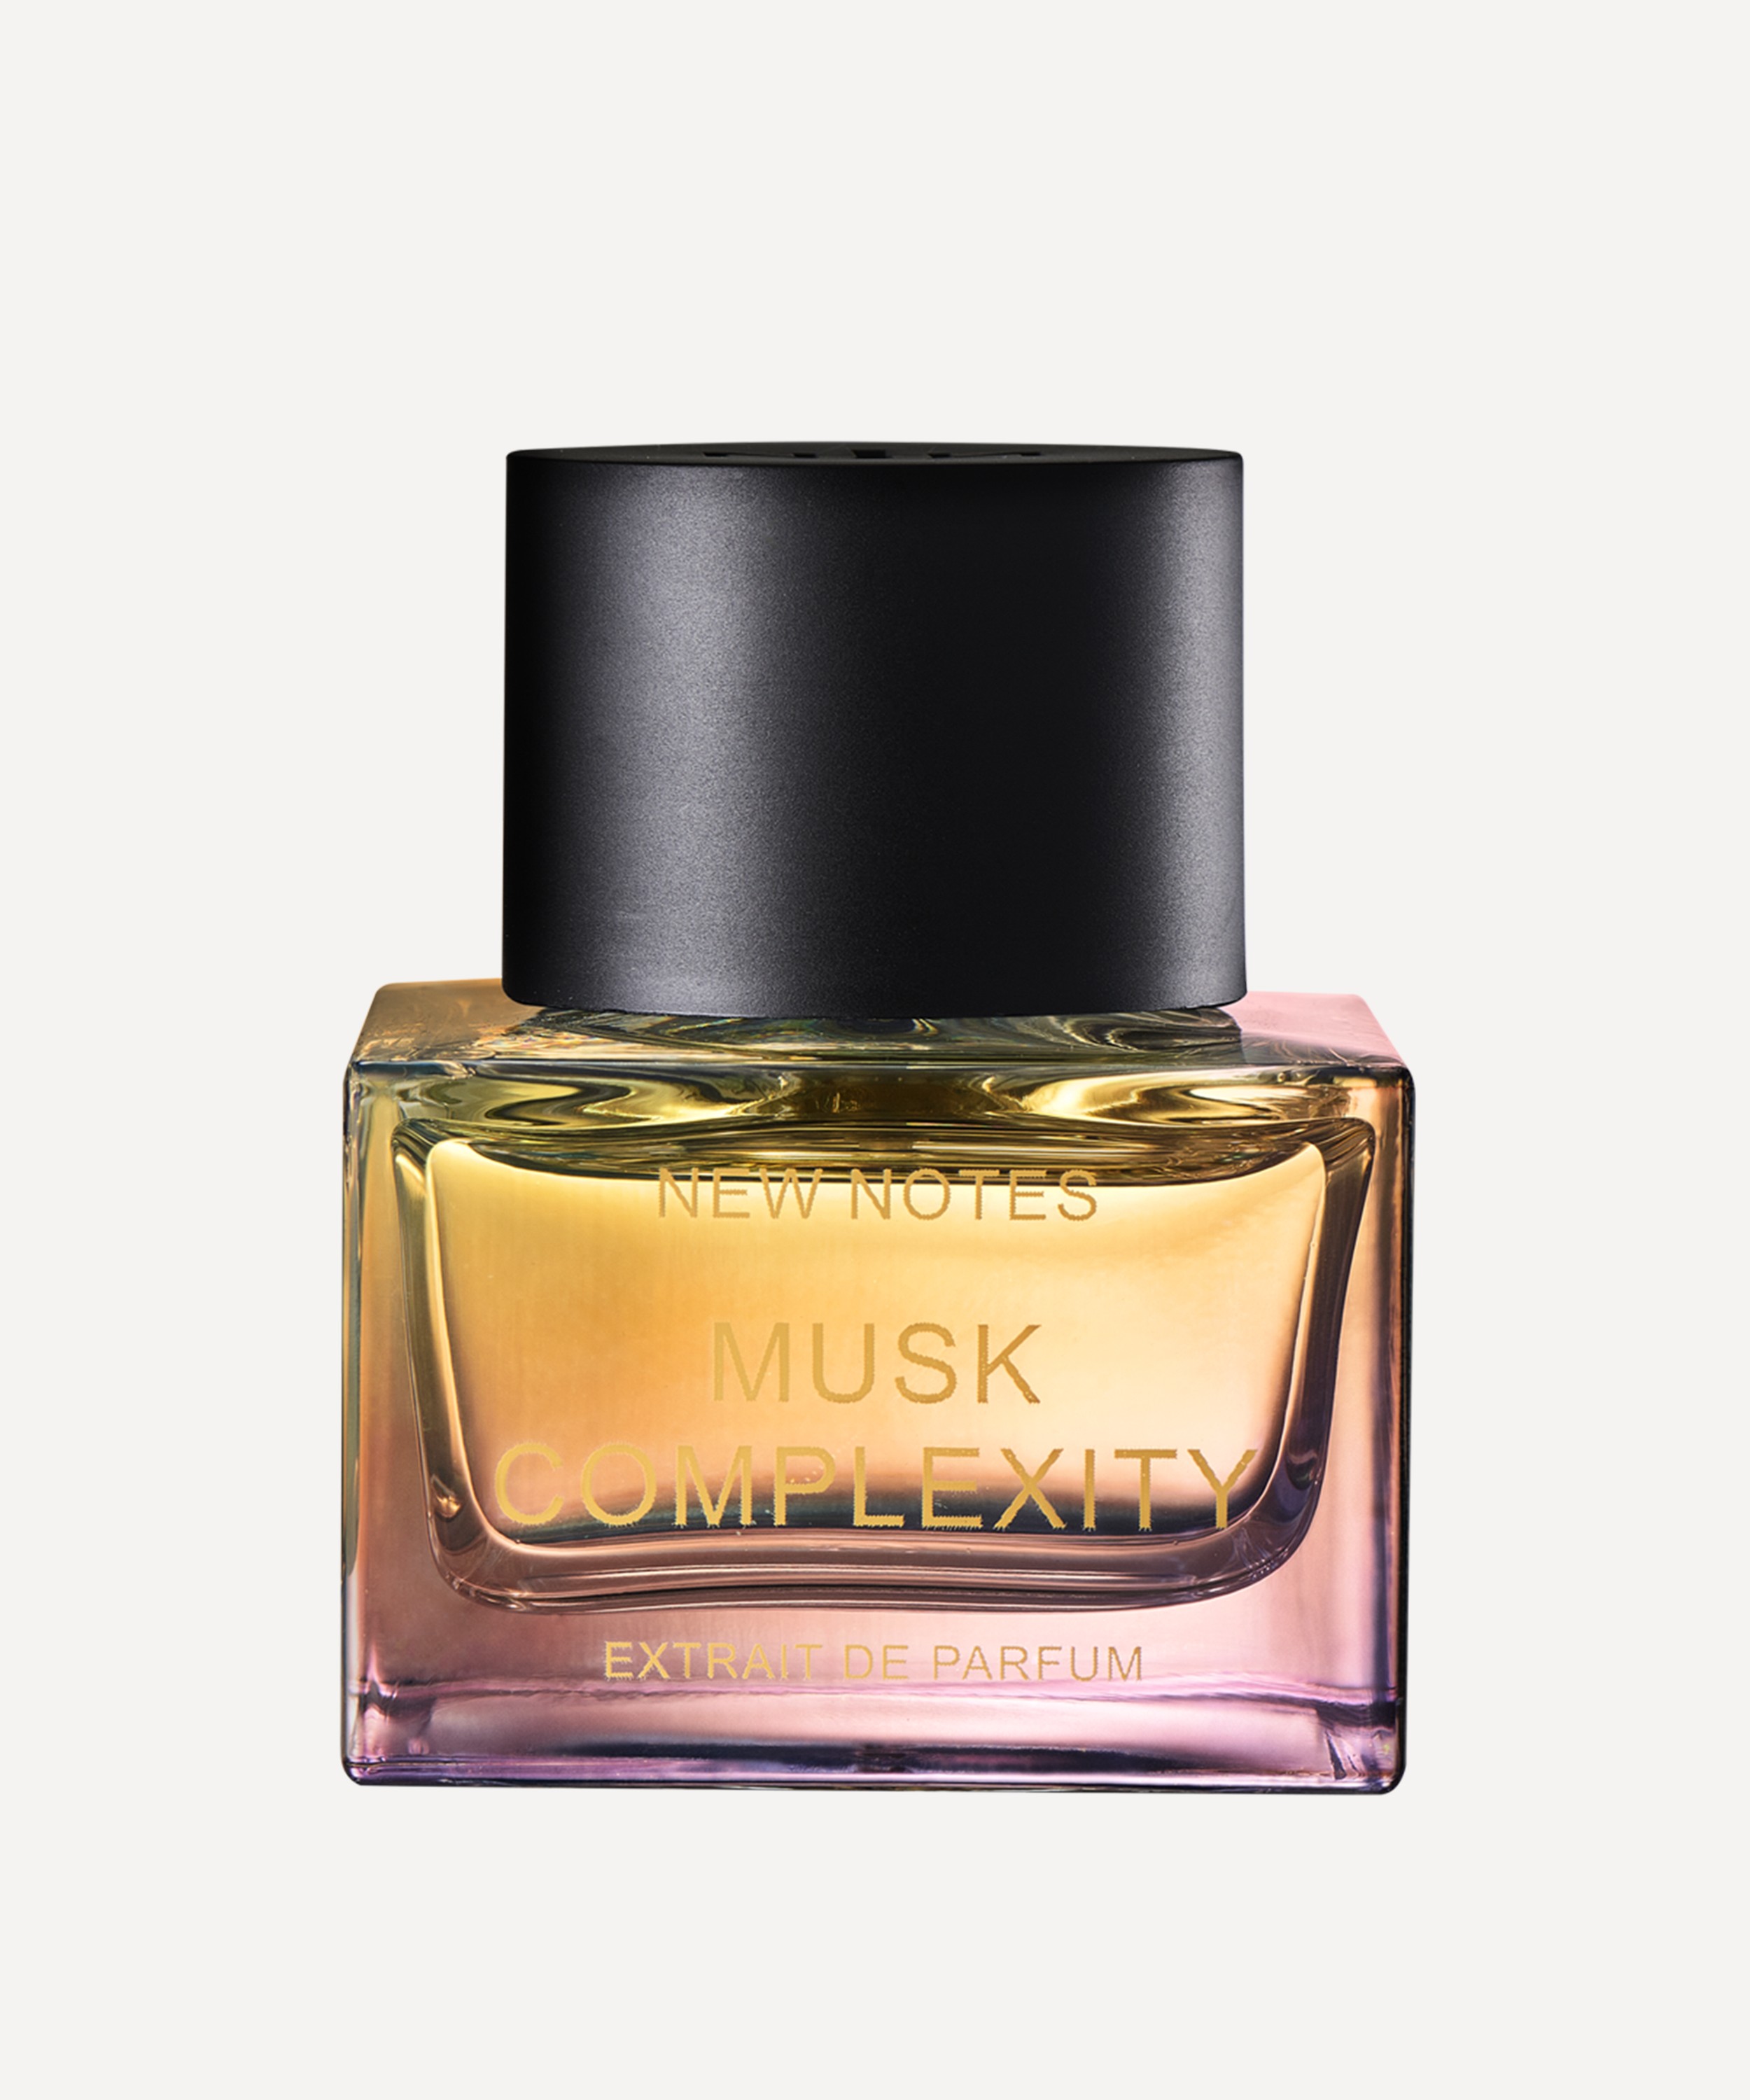 New Notes - Musk Complexity Extrait de Parfum 50ml image number 0